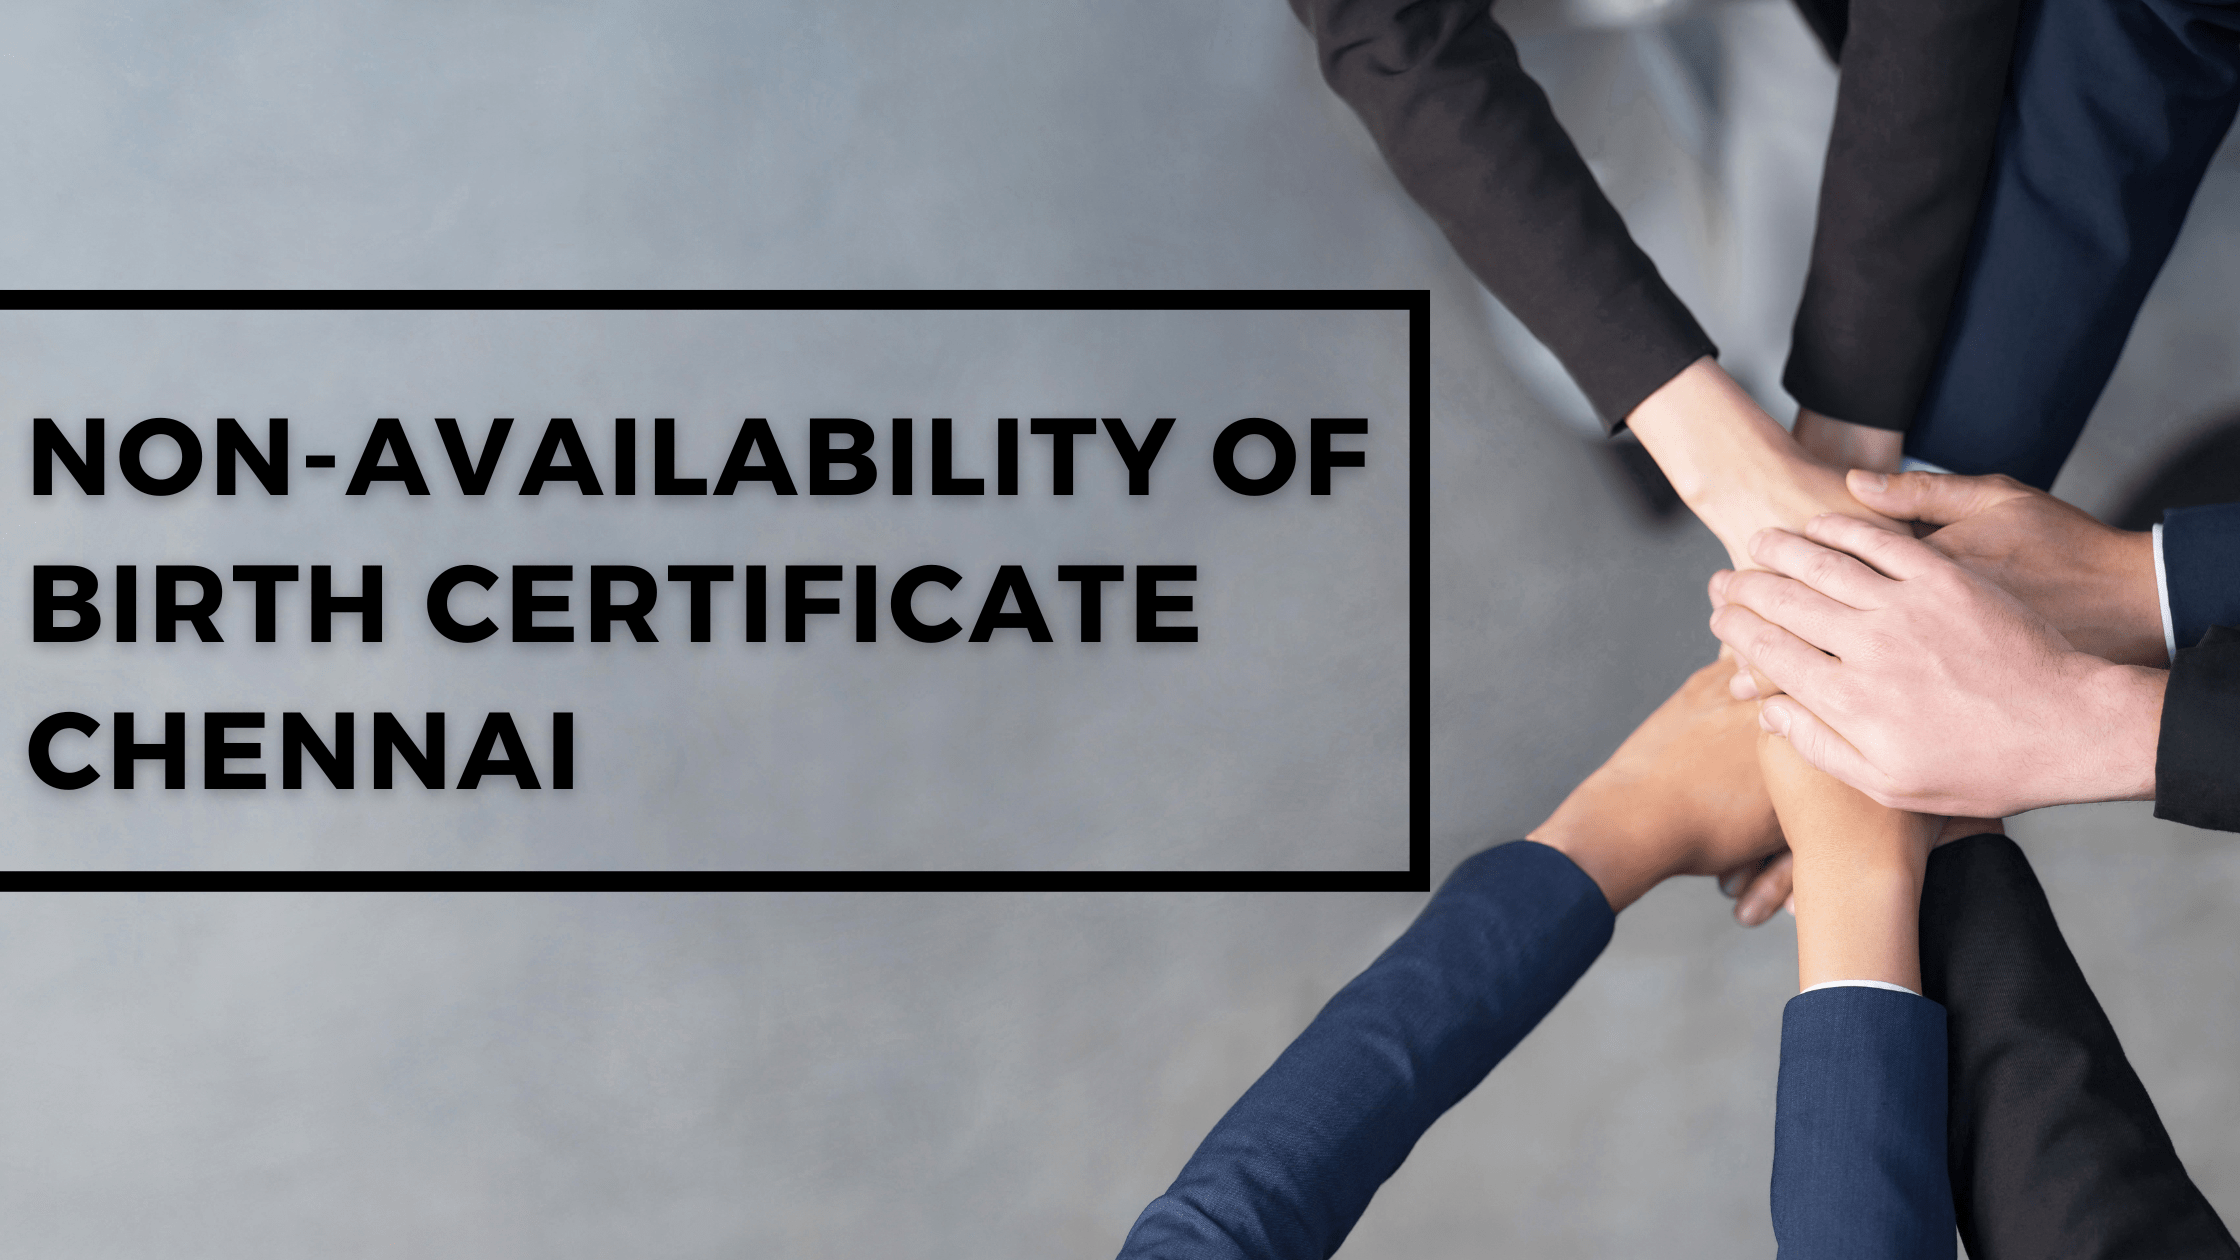 Non-Availability of birth certificate chennai